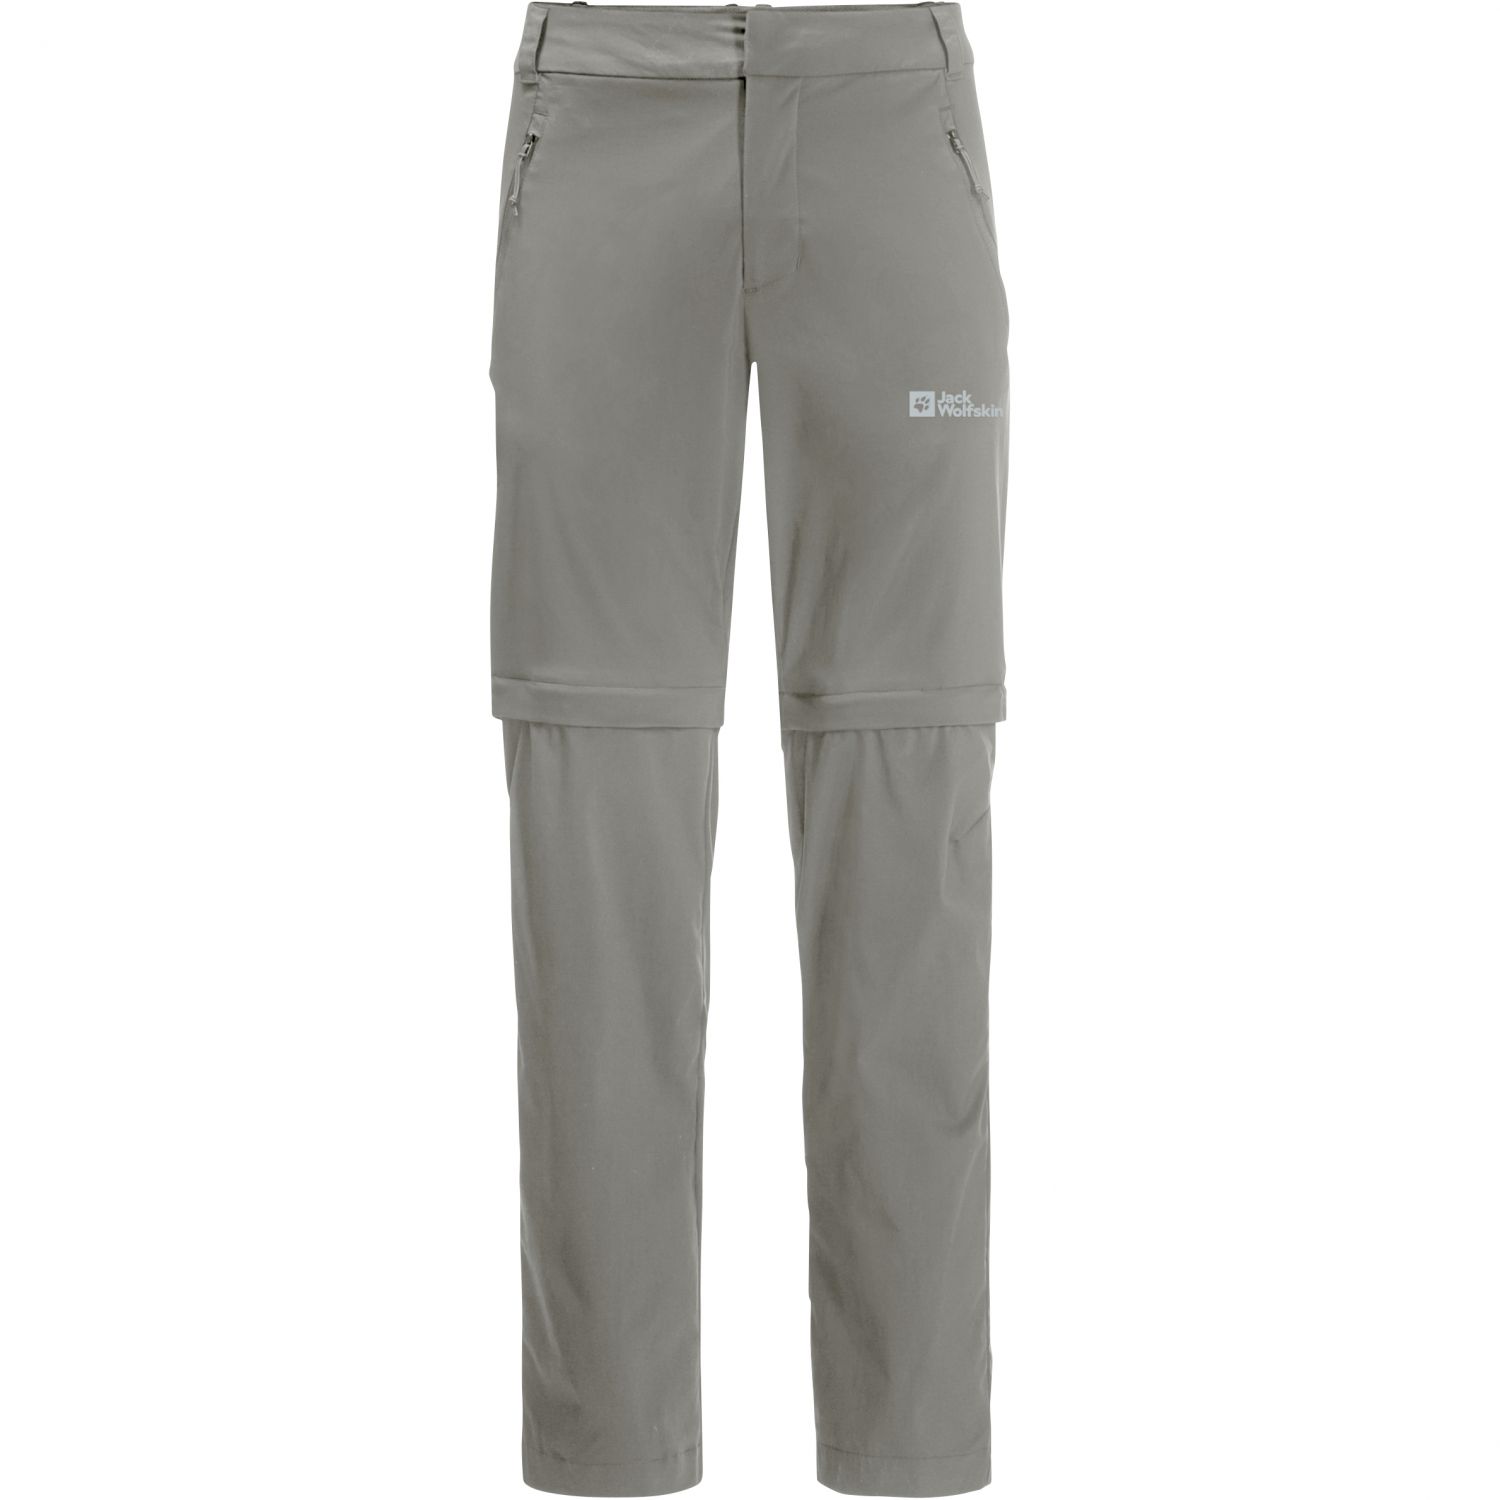 ROHAN MEN'S FUSION Grey Ultralight Hiking / Walking Trousers W36 L28 £21.50  - PicClick UK